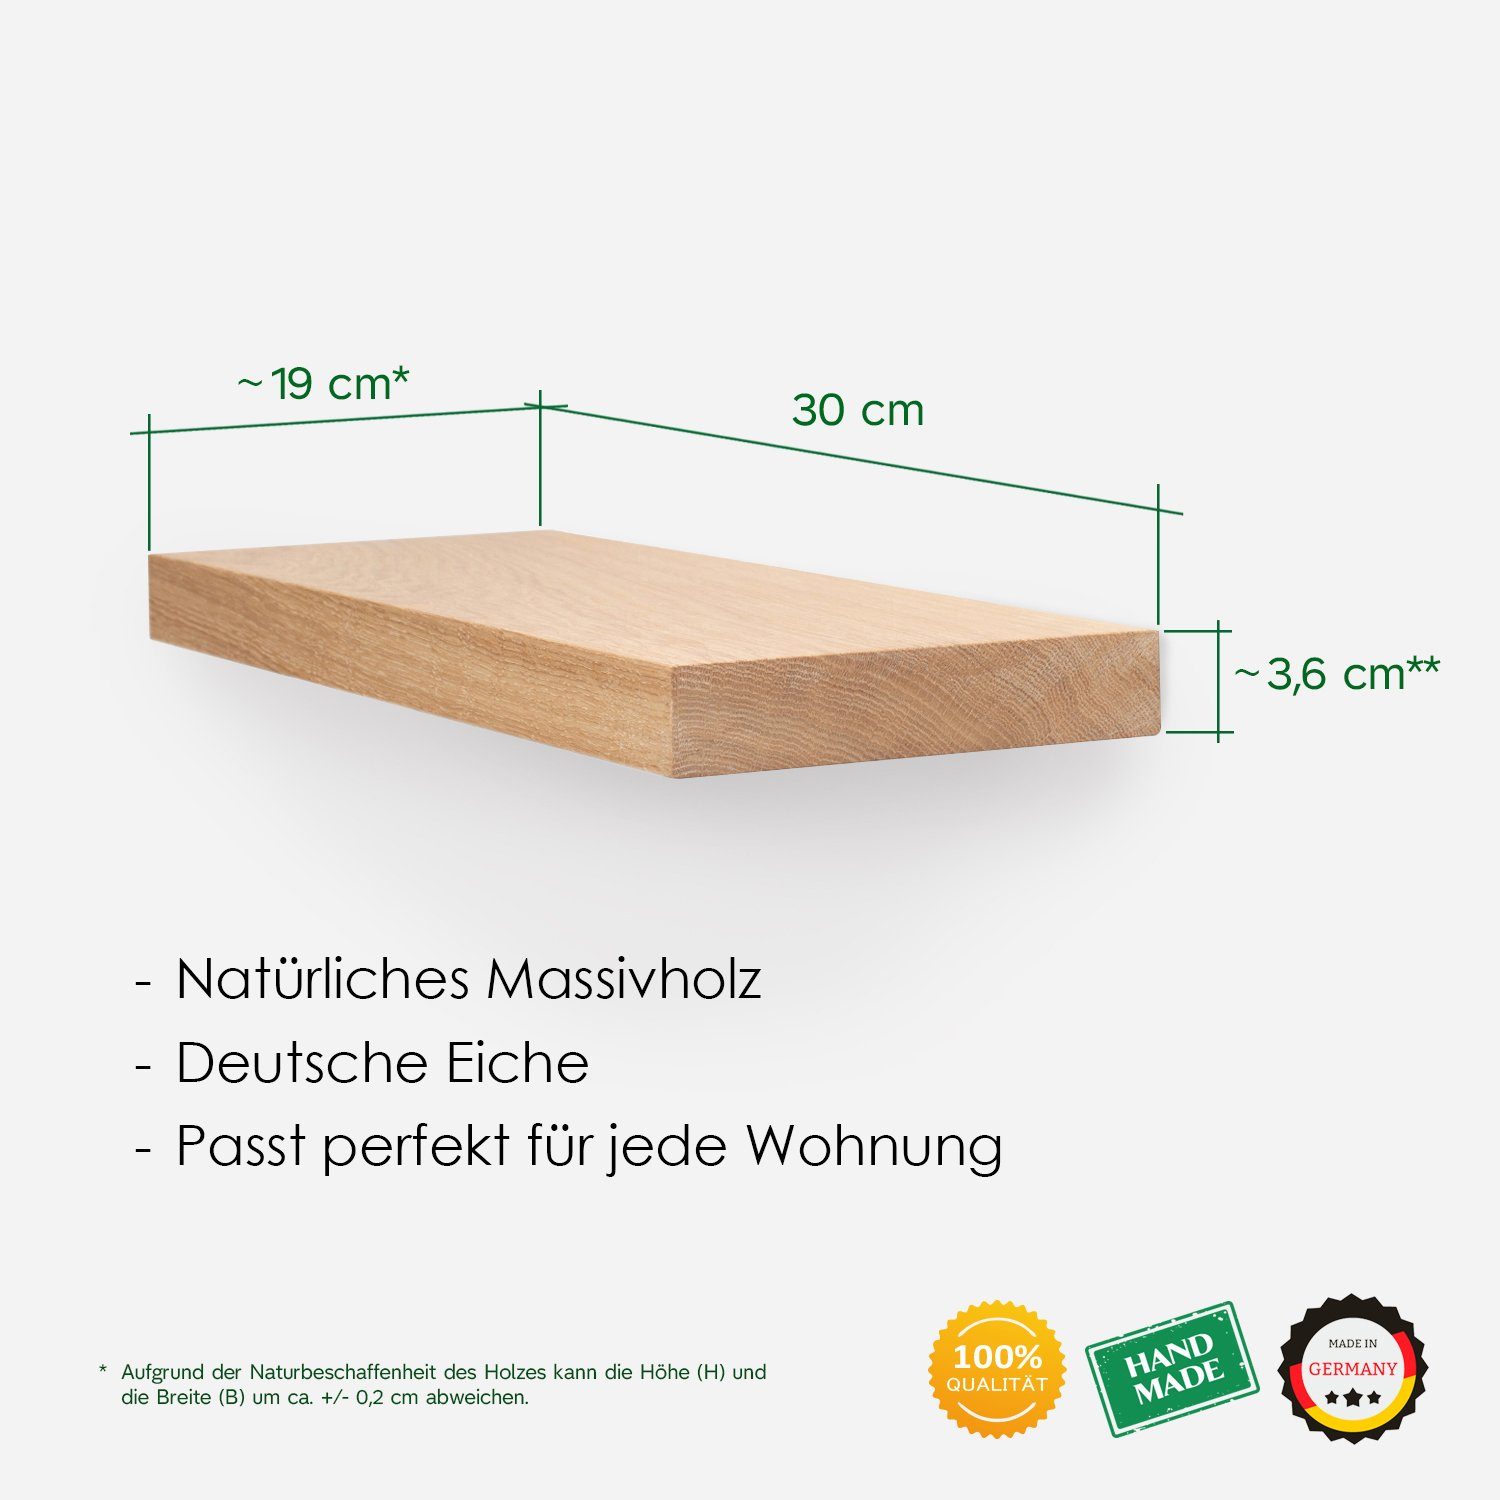 Handgefertigtes Germany Regal Wandregal - in HOLY, Eiche Natur massiv Made Rikmani Holz